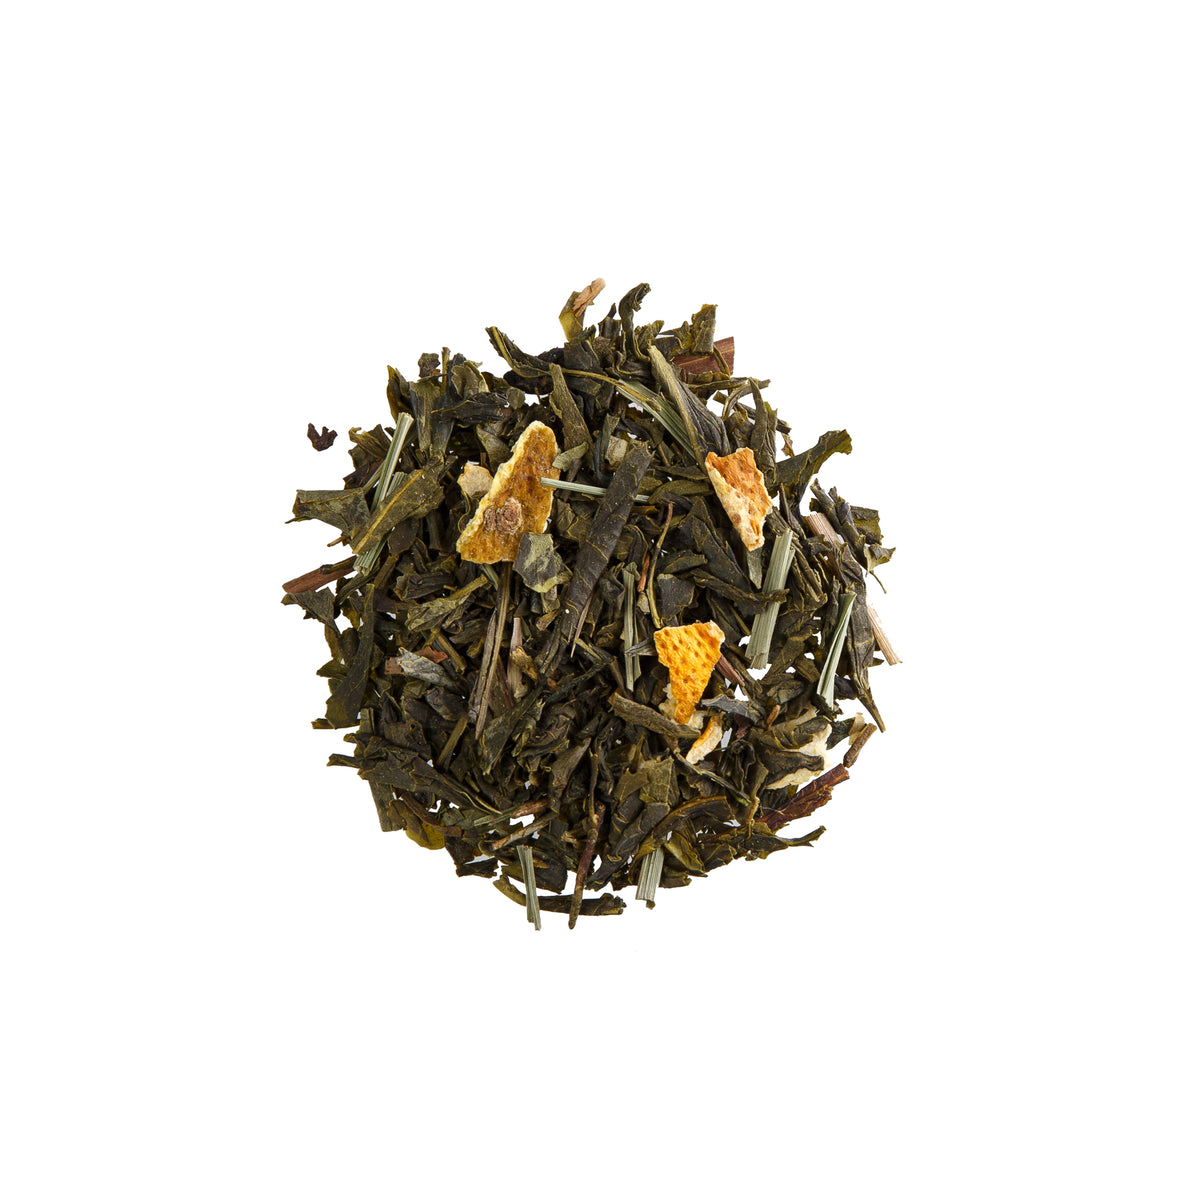 Primary Image of Sunrise Lemon Sencha Green Tea